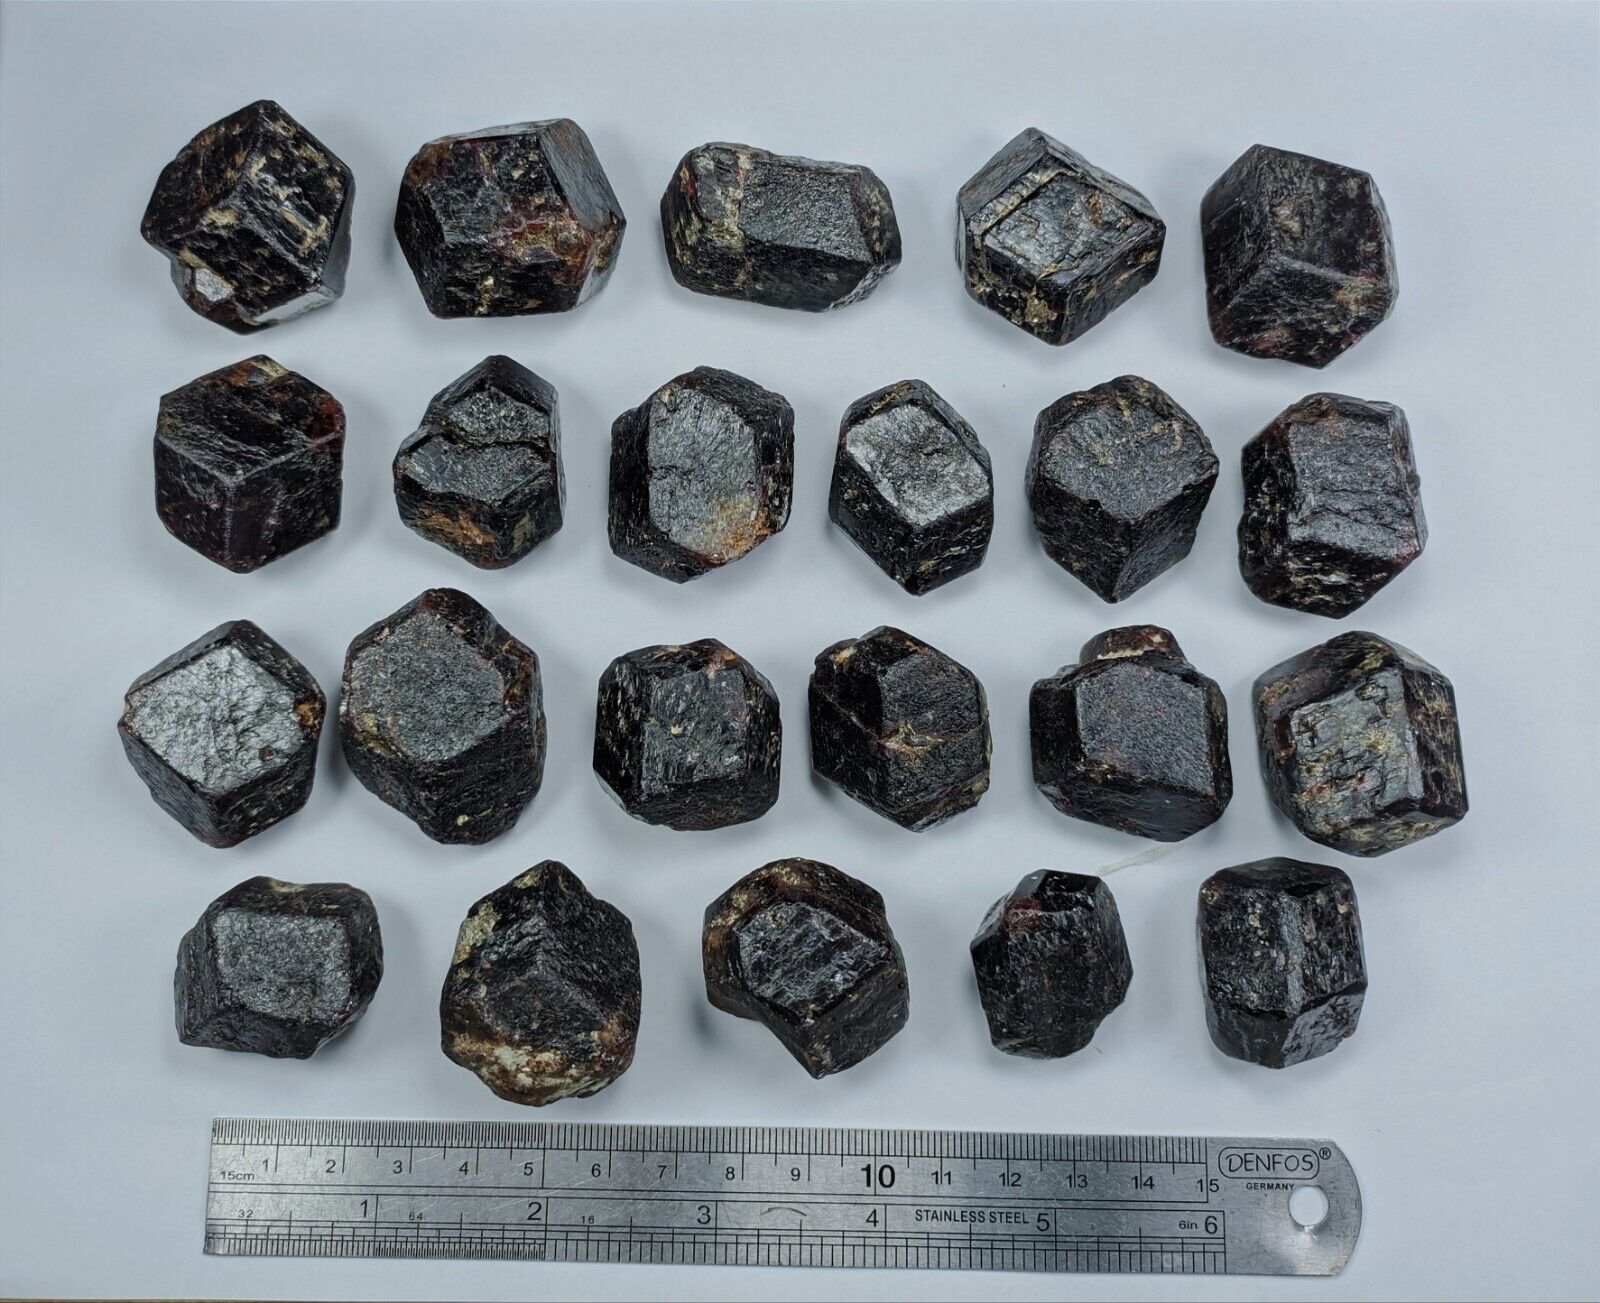 Almandine Garnet Crystals from Afghanistan.